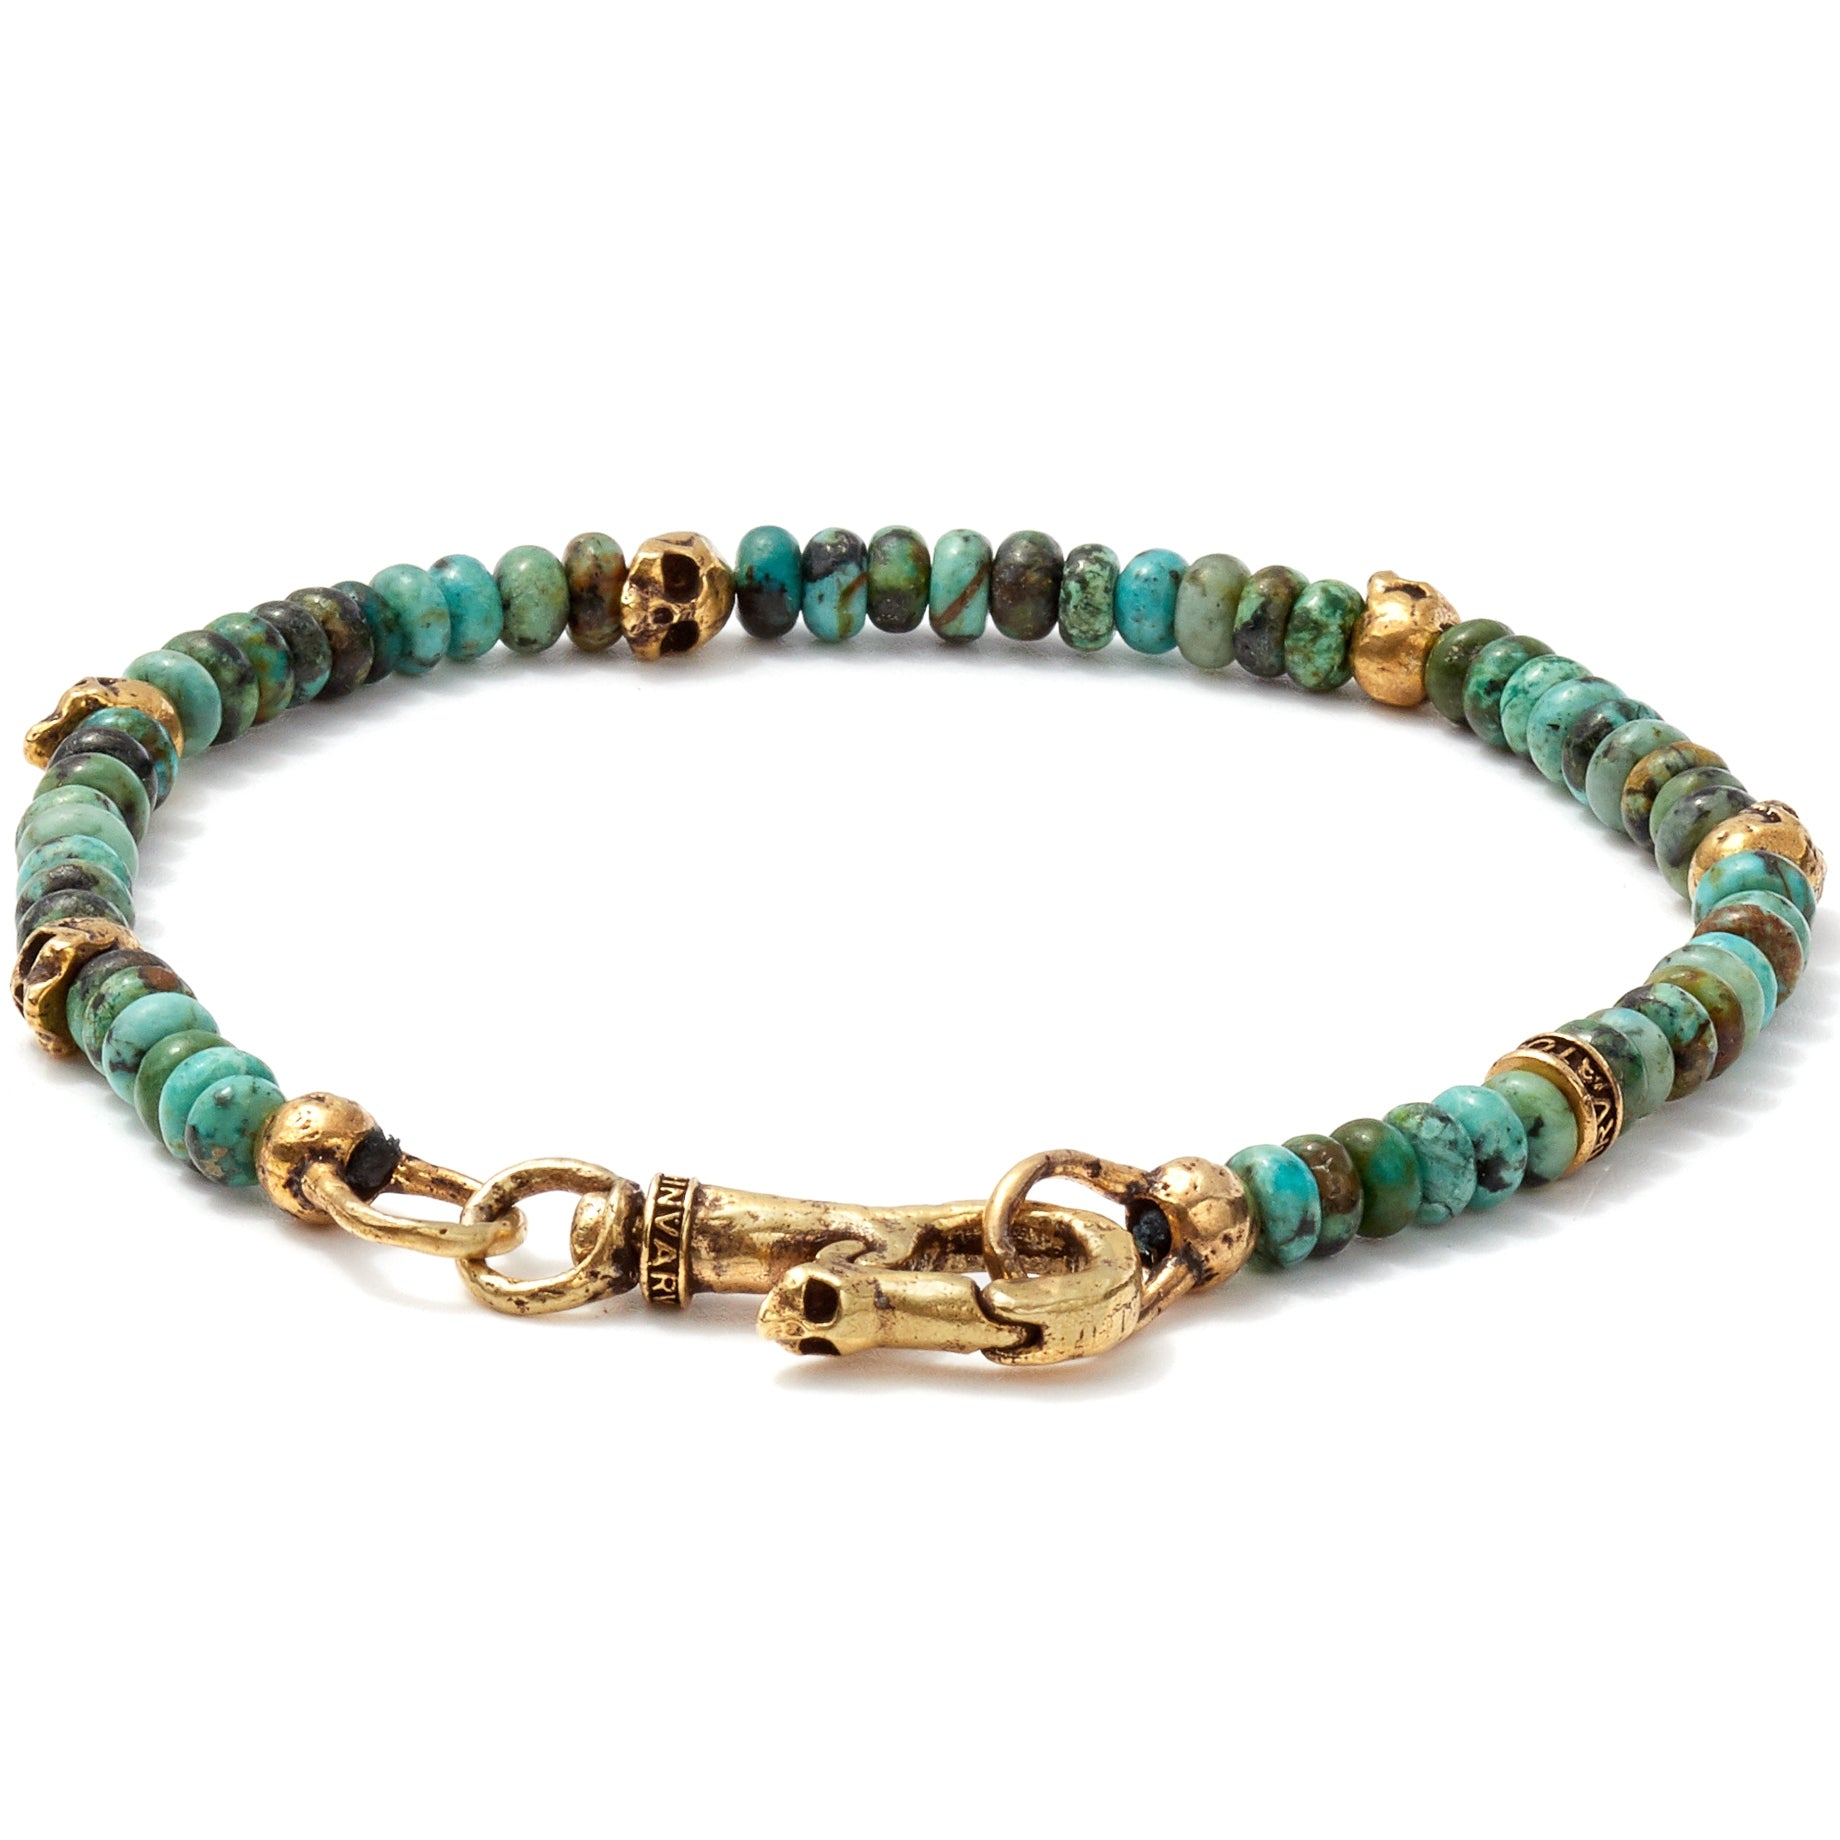 John Varvatos Brass Skull Beads and 4mm Color Beads Bracelet, Blue/Green